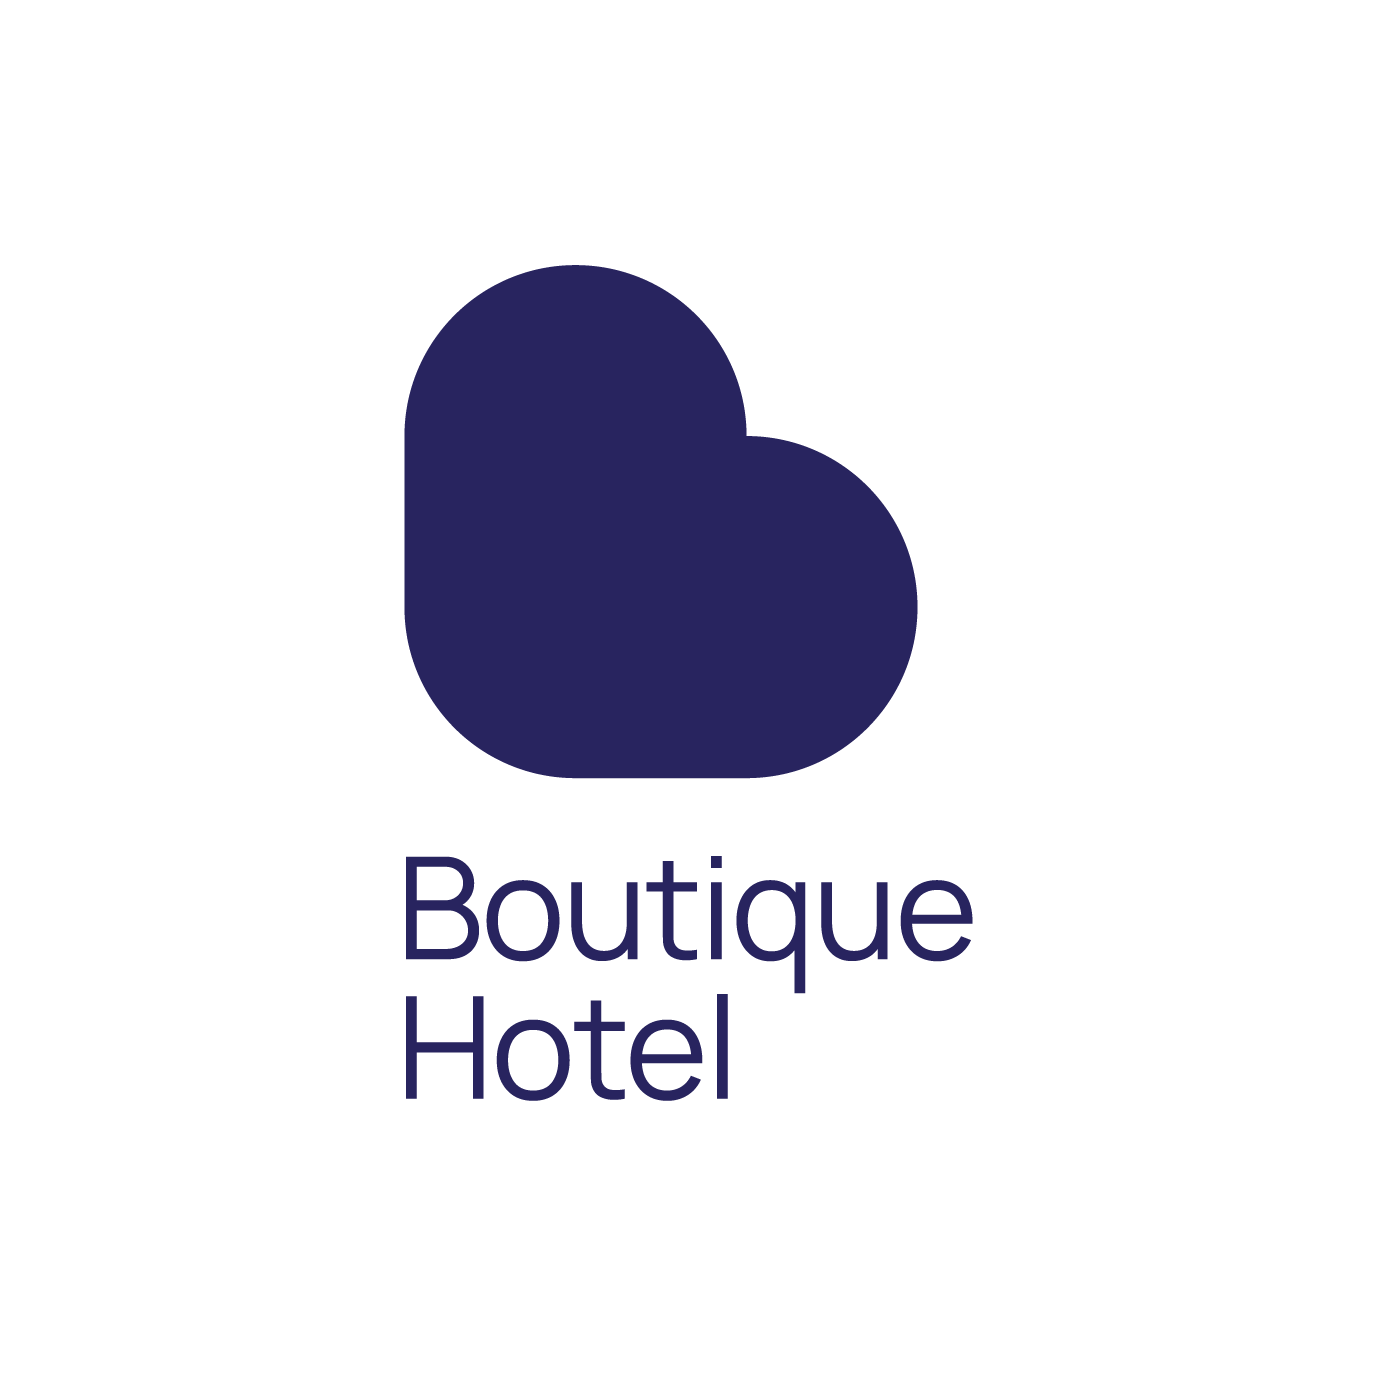 Boutique Hotel Logo